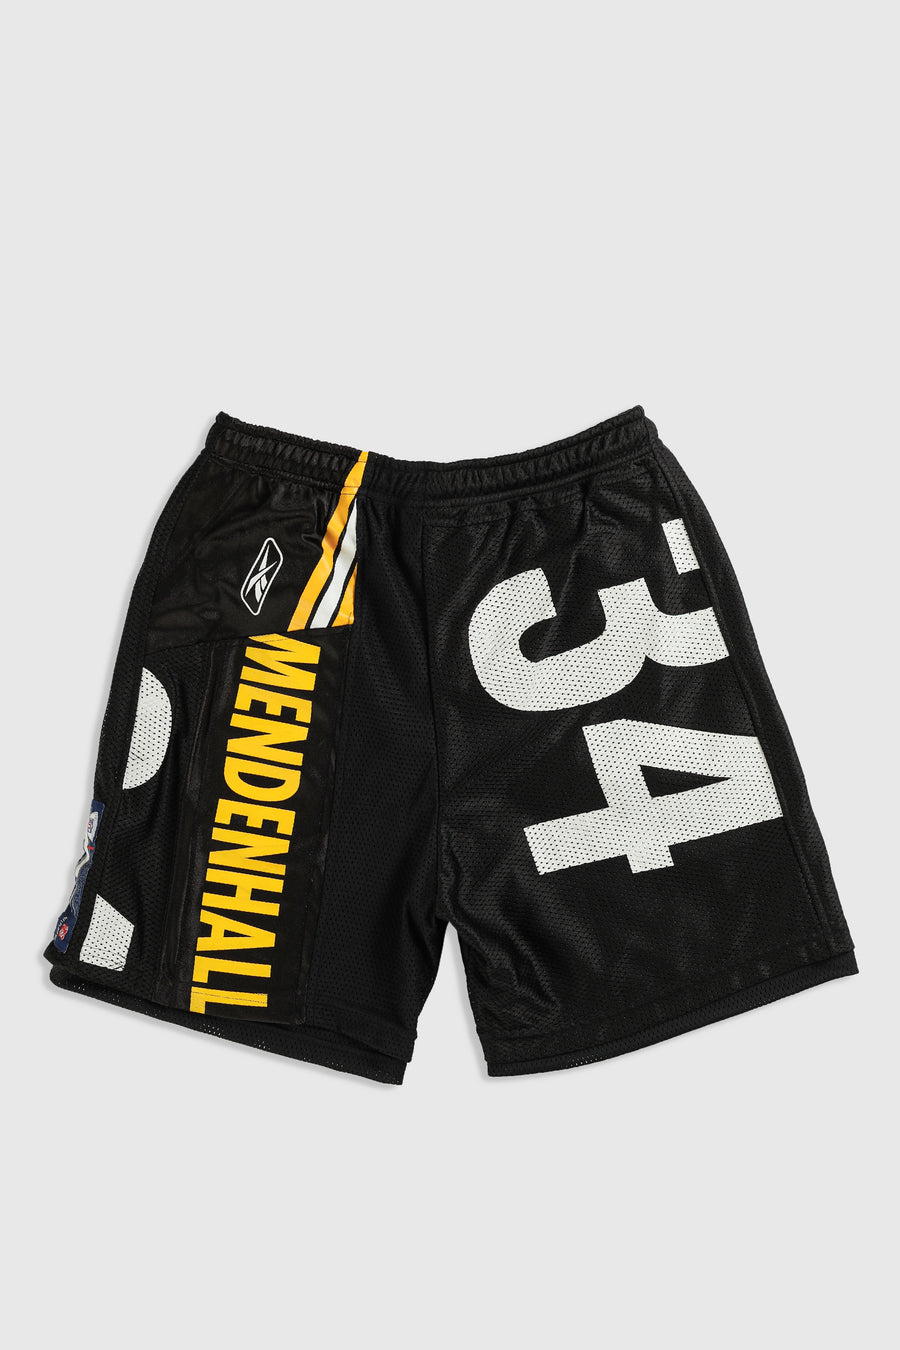 Unisex Rework Steelers NFL Jersey Shorts - L